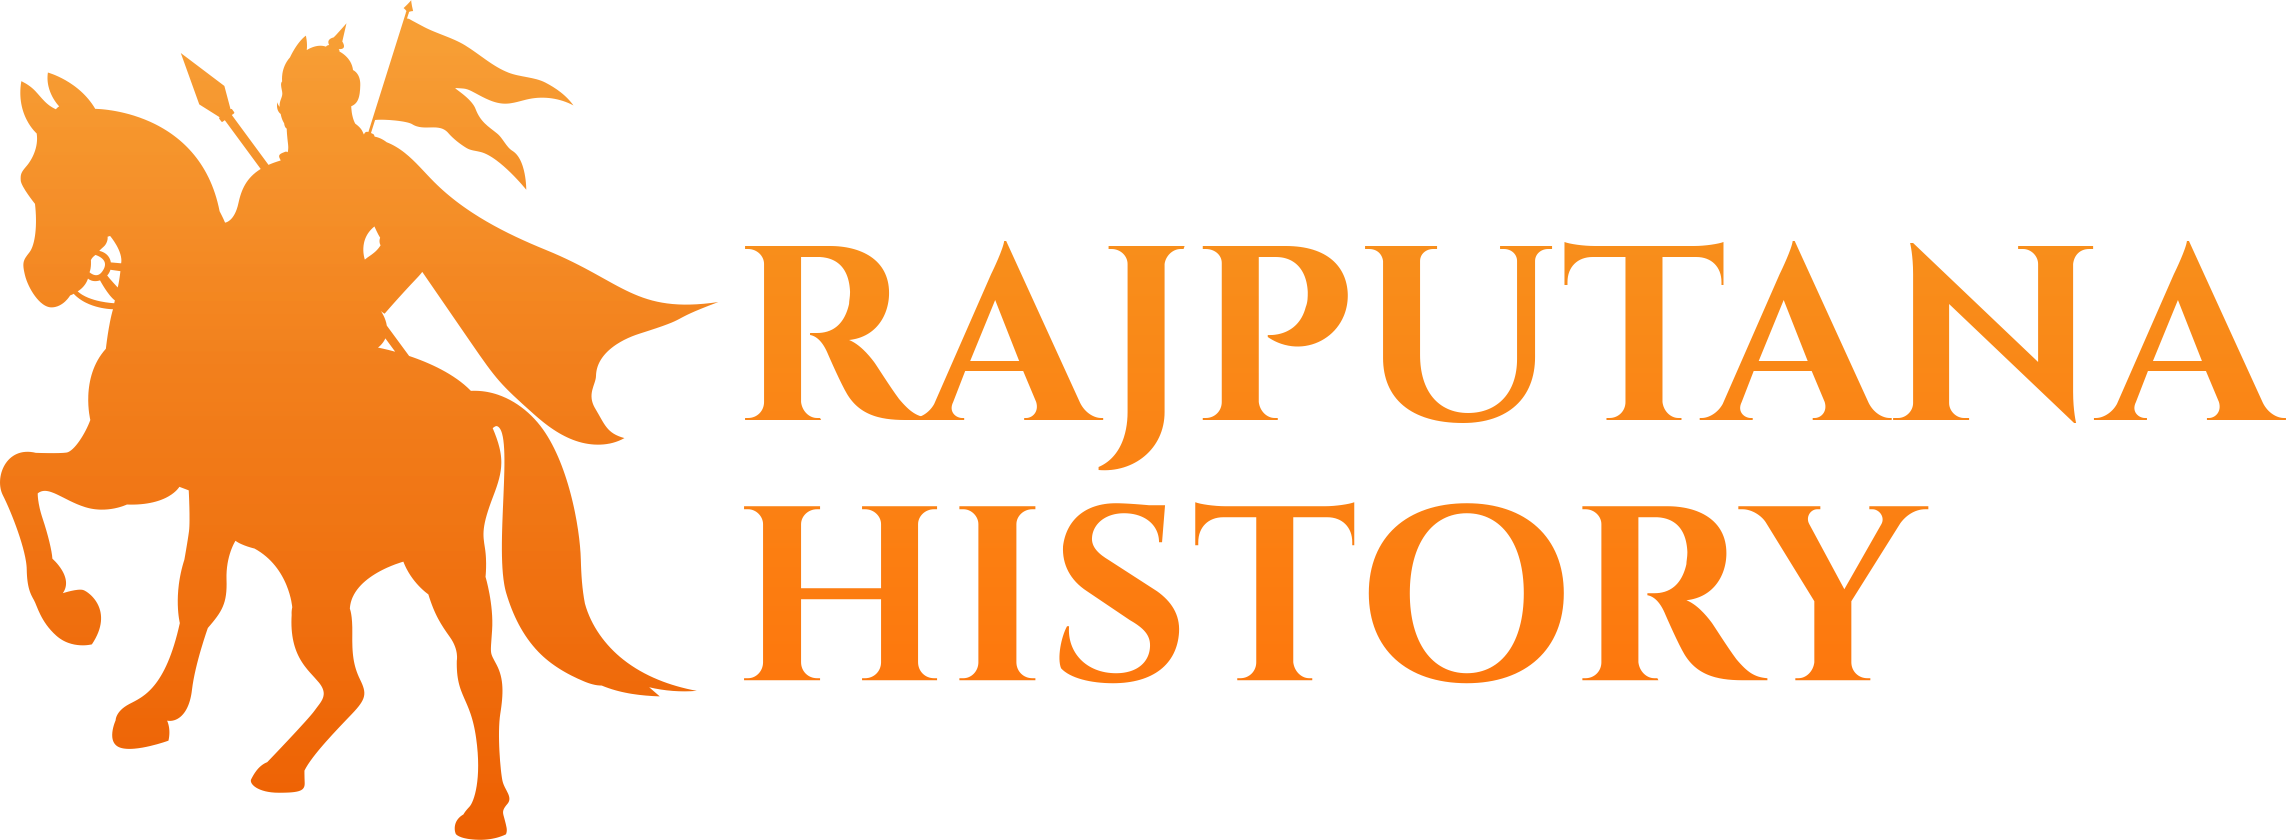 Rajputana History